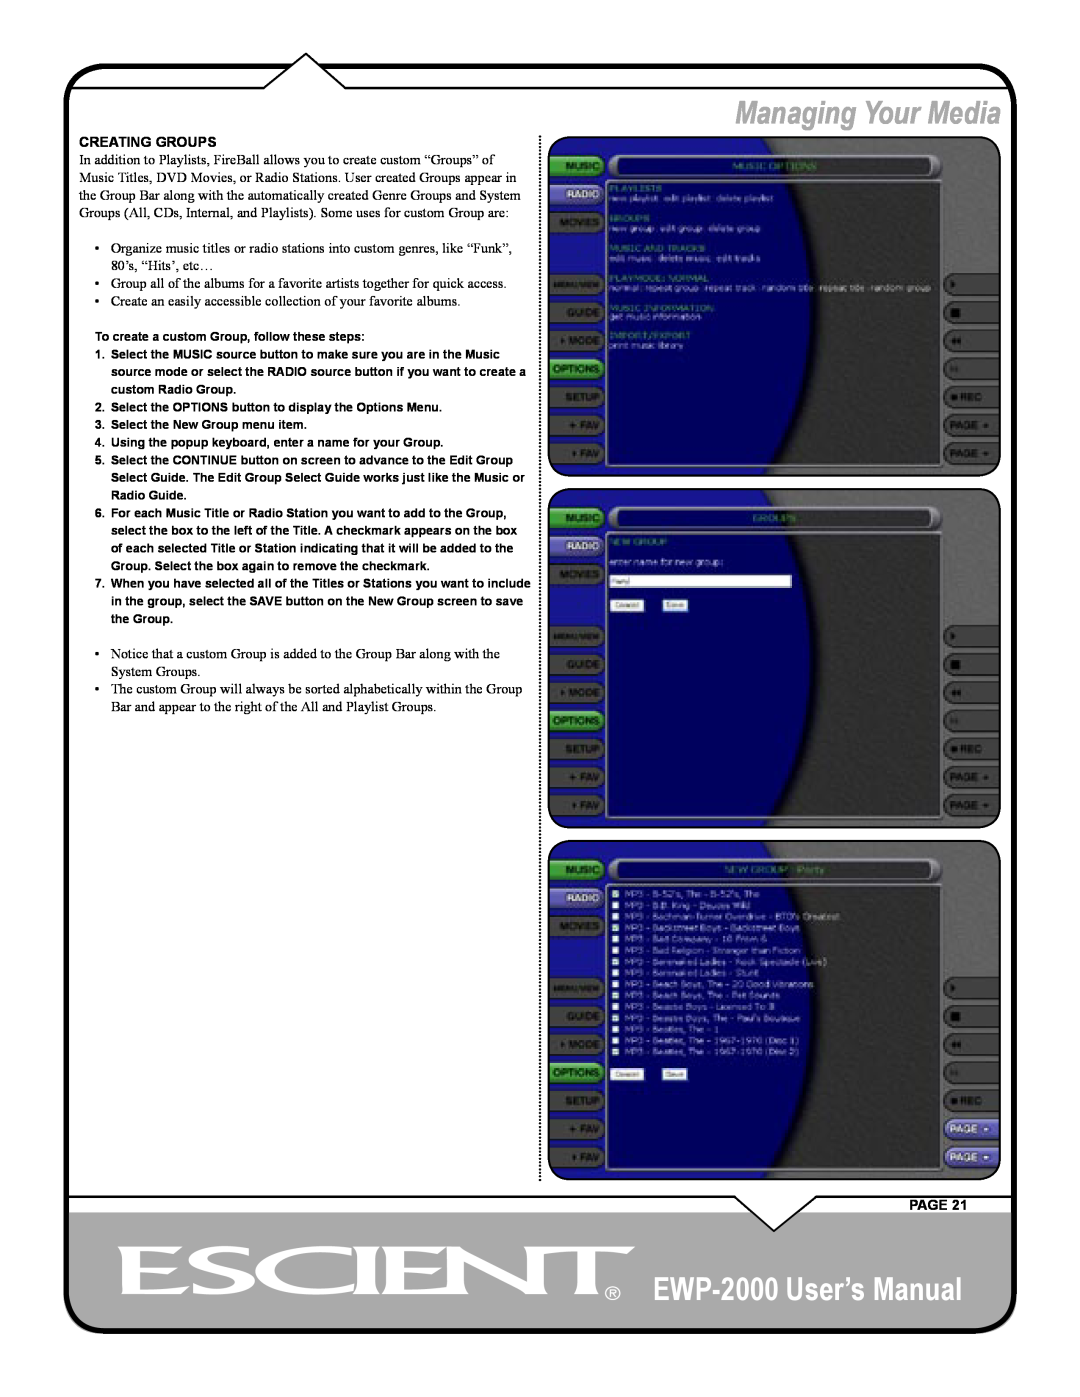 Escient user manual Managing Your Media, EWP-2000 User’s Manual, Creating Groups, Page 